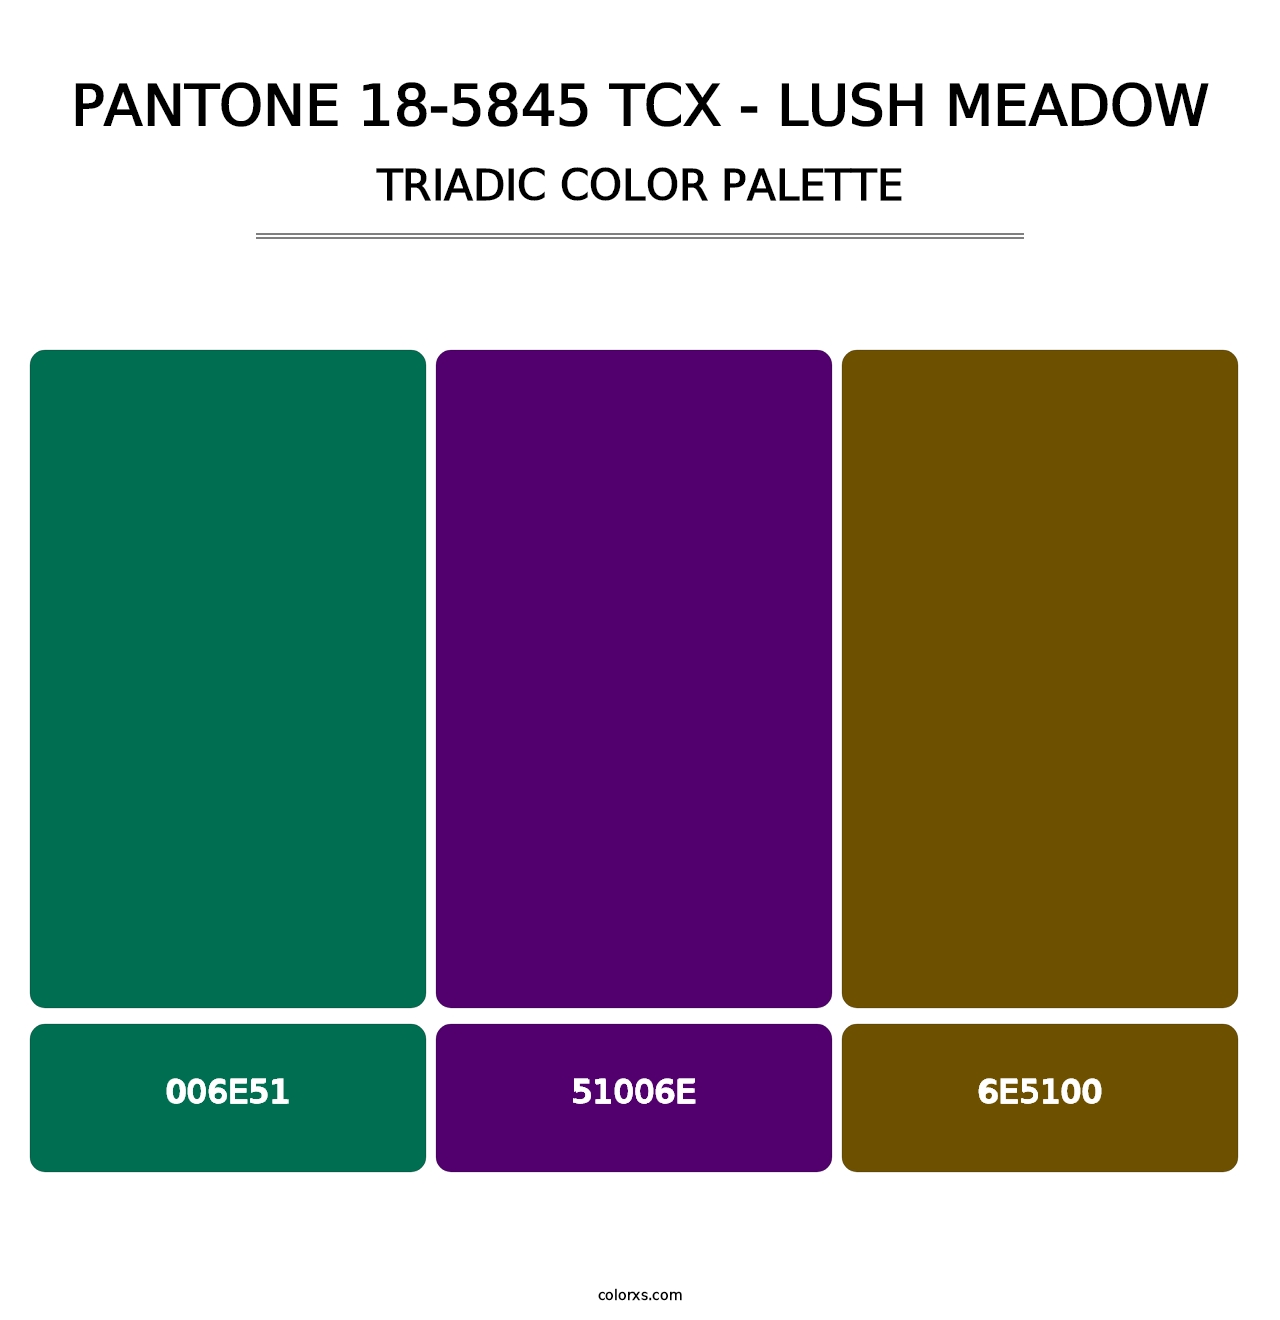 PANTONE 18-5845 TCX - Lush Meadow - Triadic Color Palette